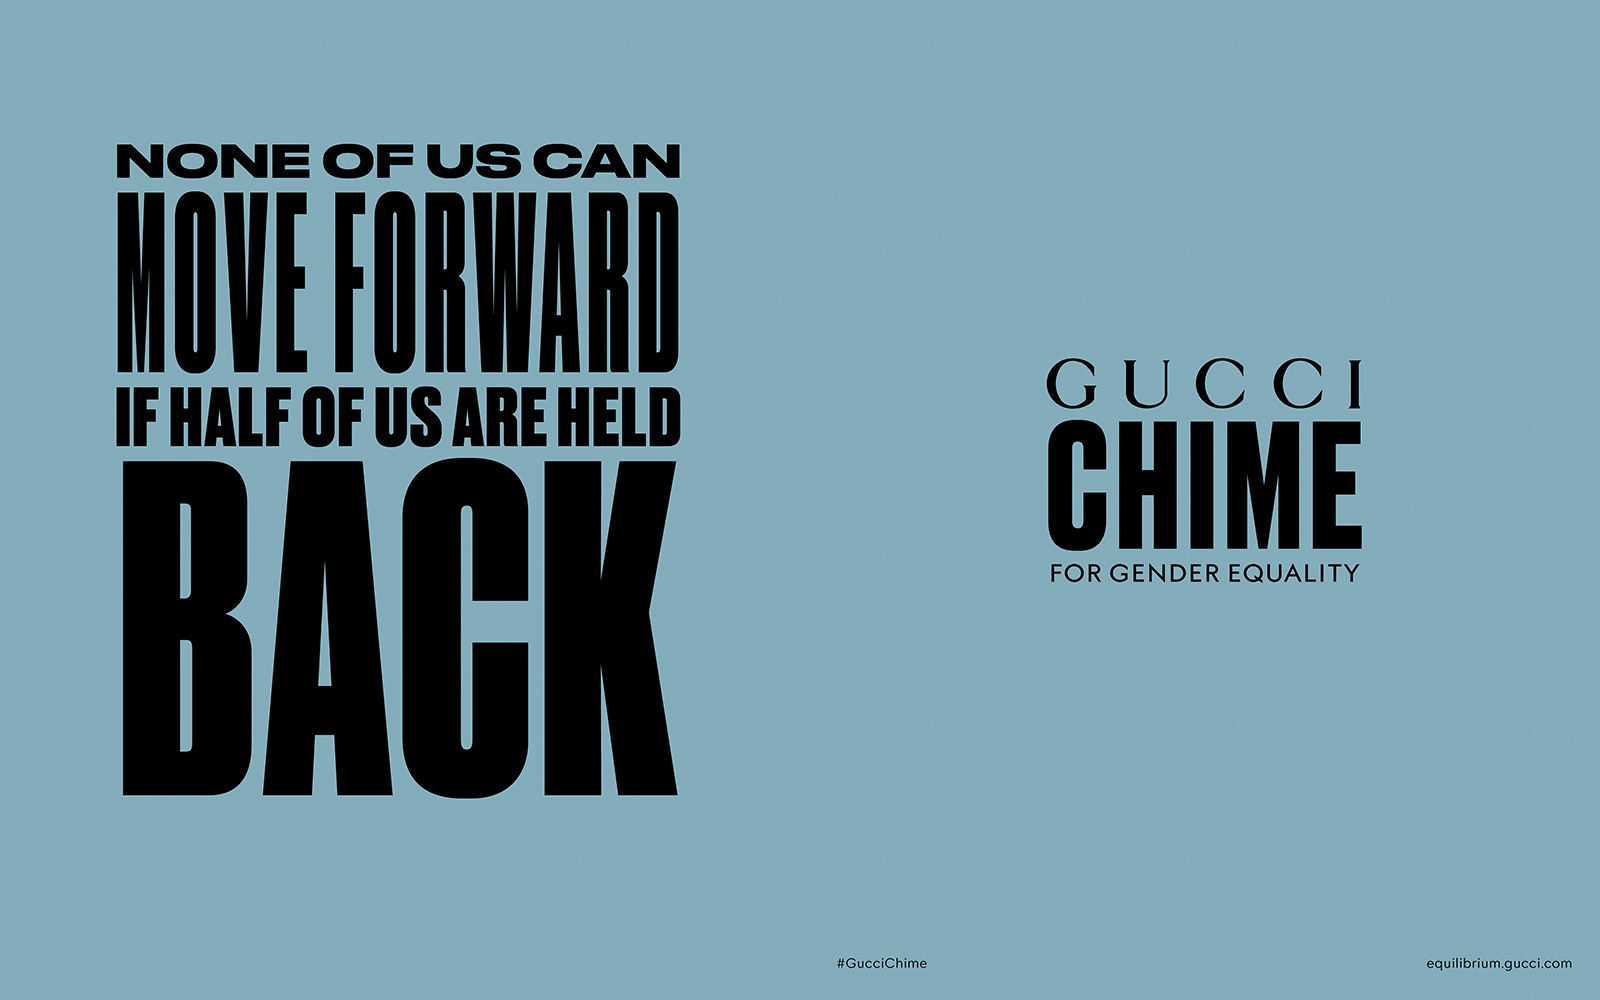 Gucci CHIME